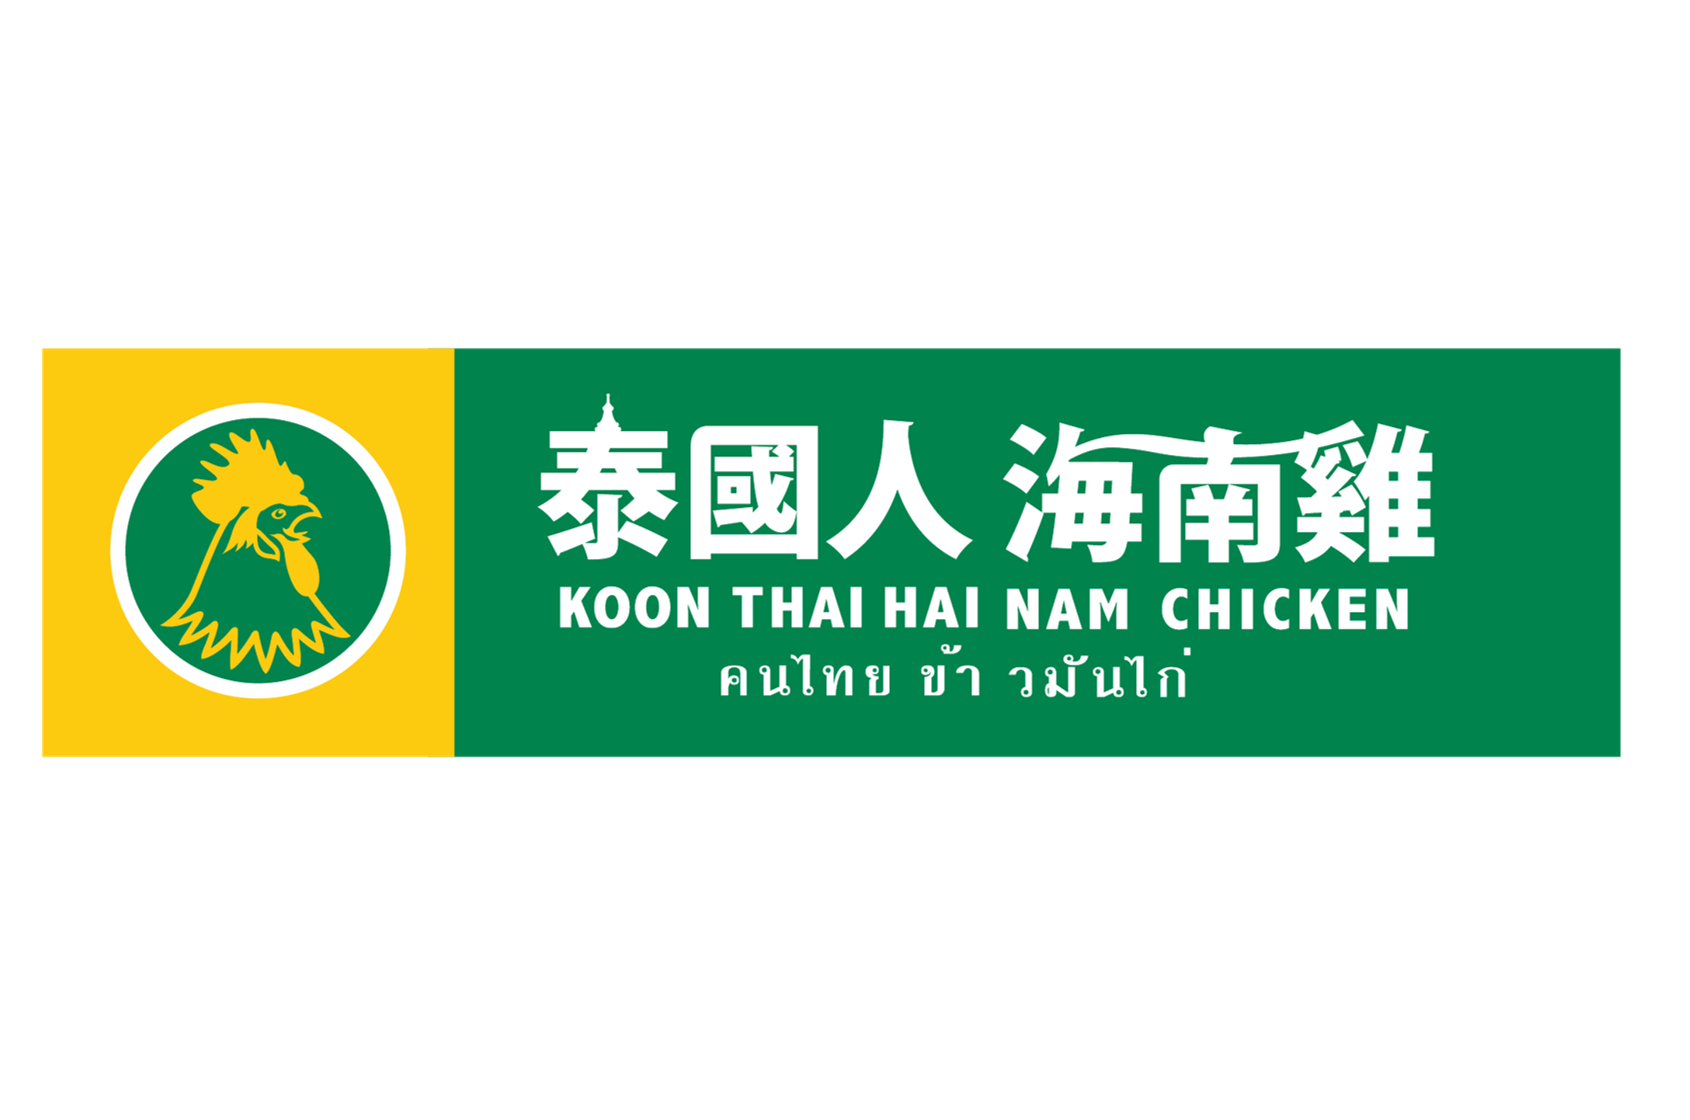 Koon Thai Hai Nam Chicken